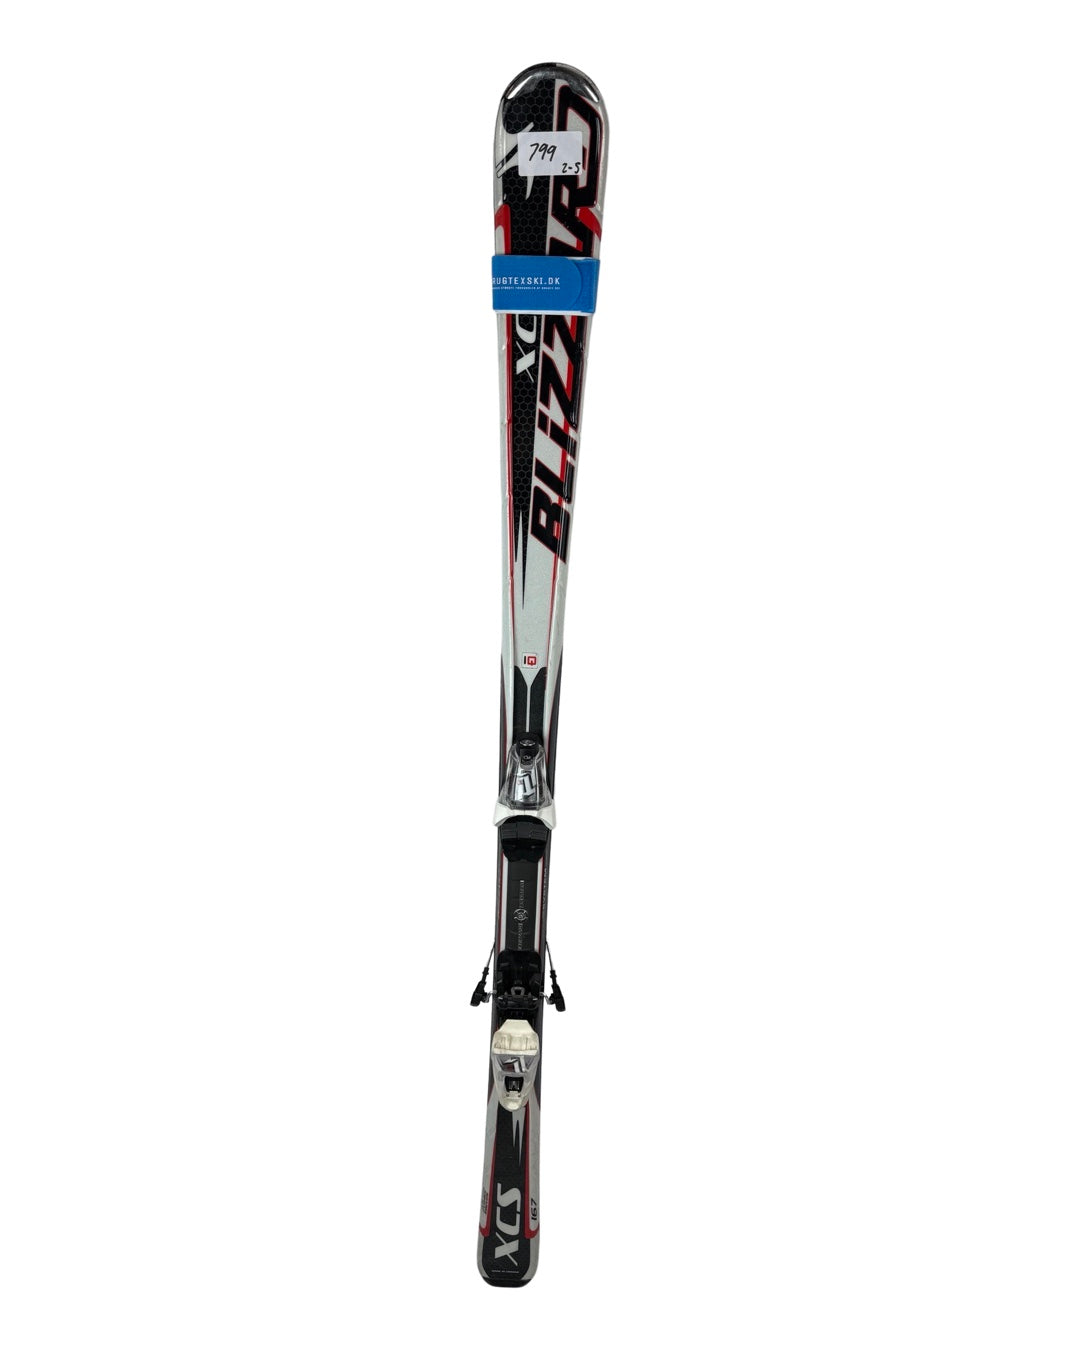 Voksen ski - blandet 799 2